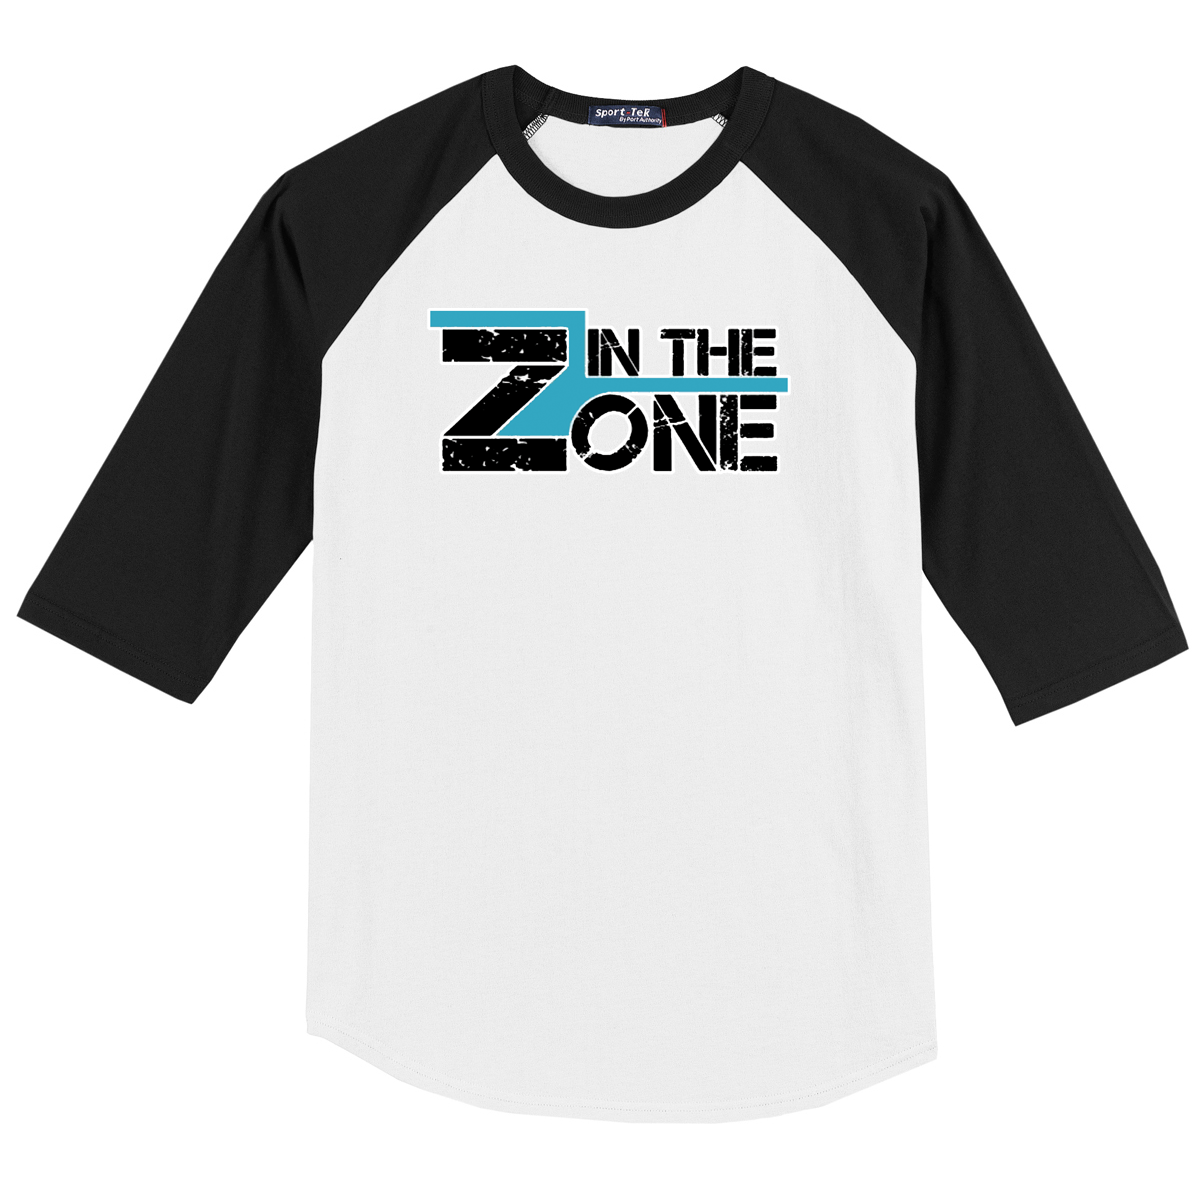 The Zone 3/4 Sleeve Baseball Shirt